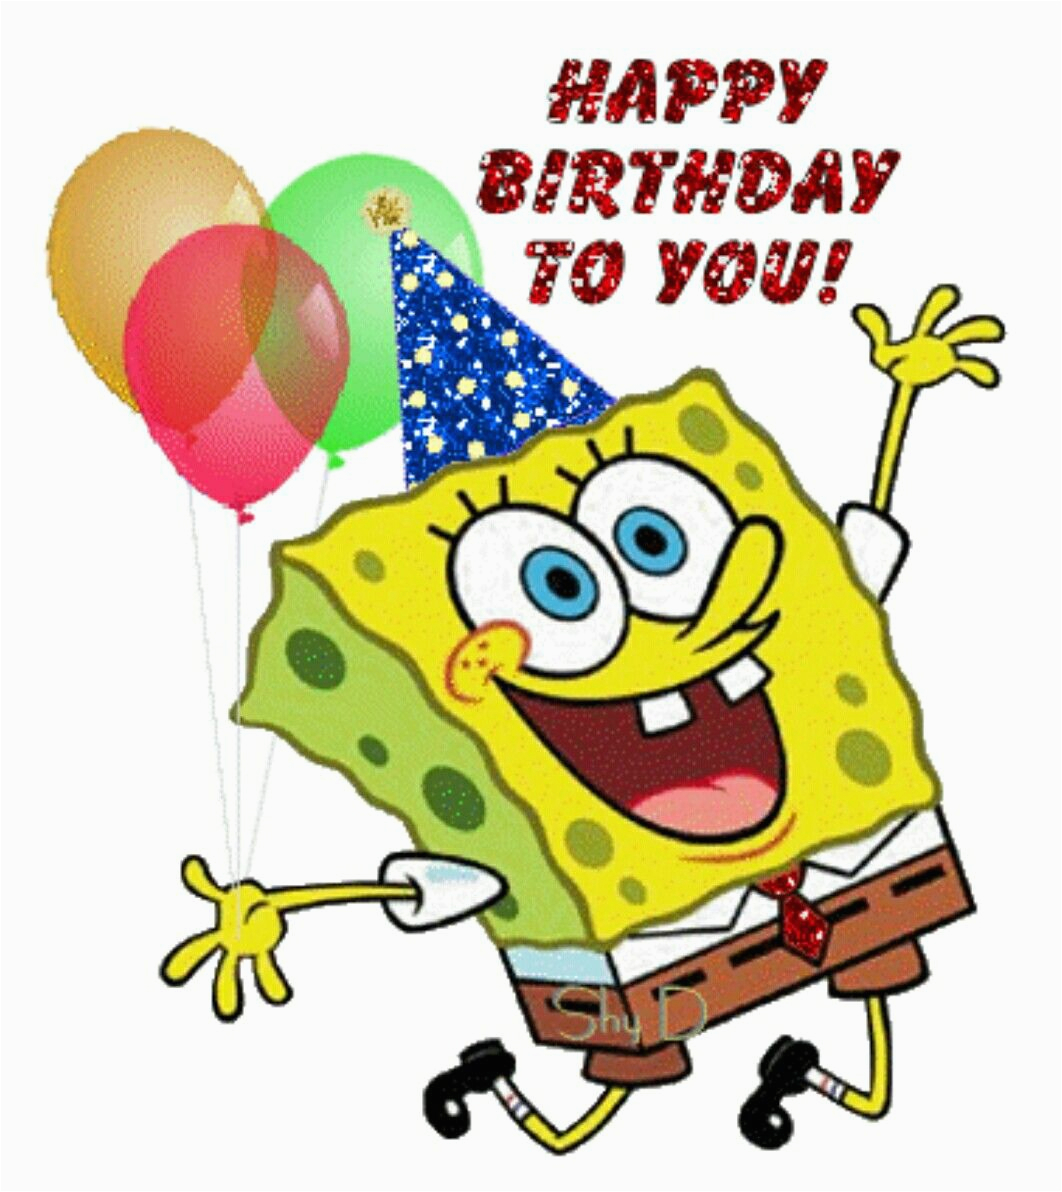 spongebob-happy-birthday-quotes-birthdaybuzz